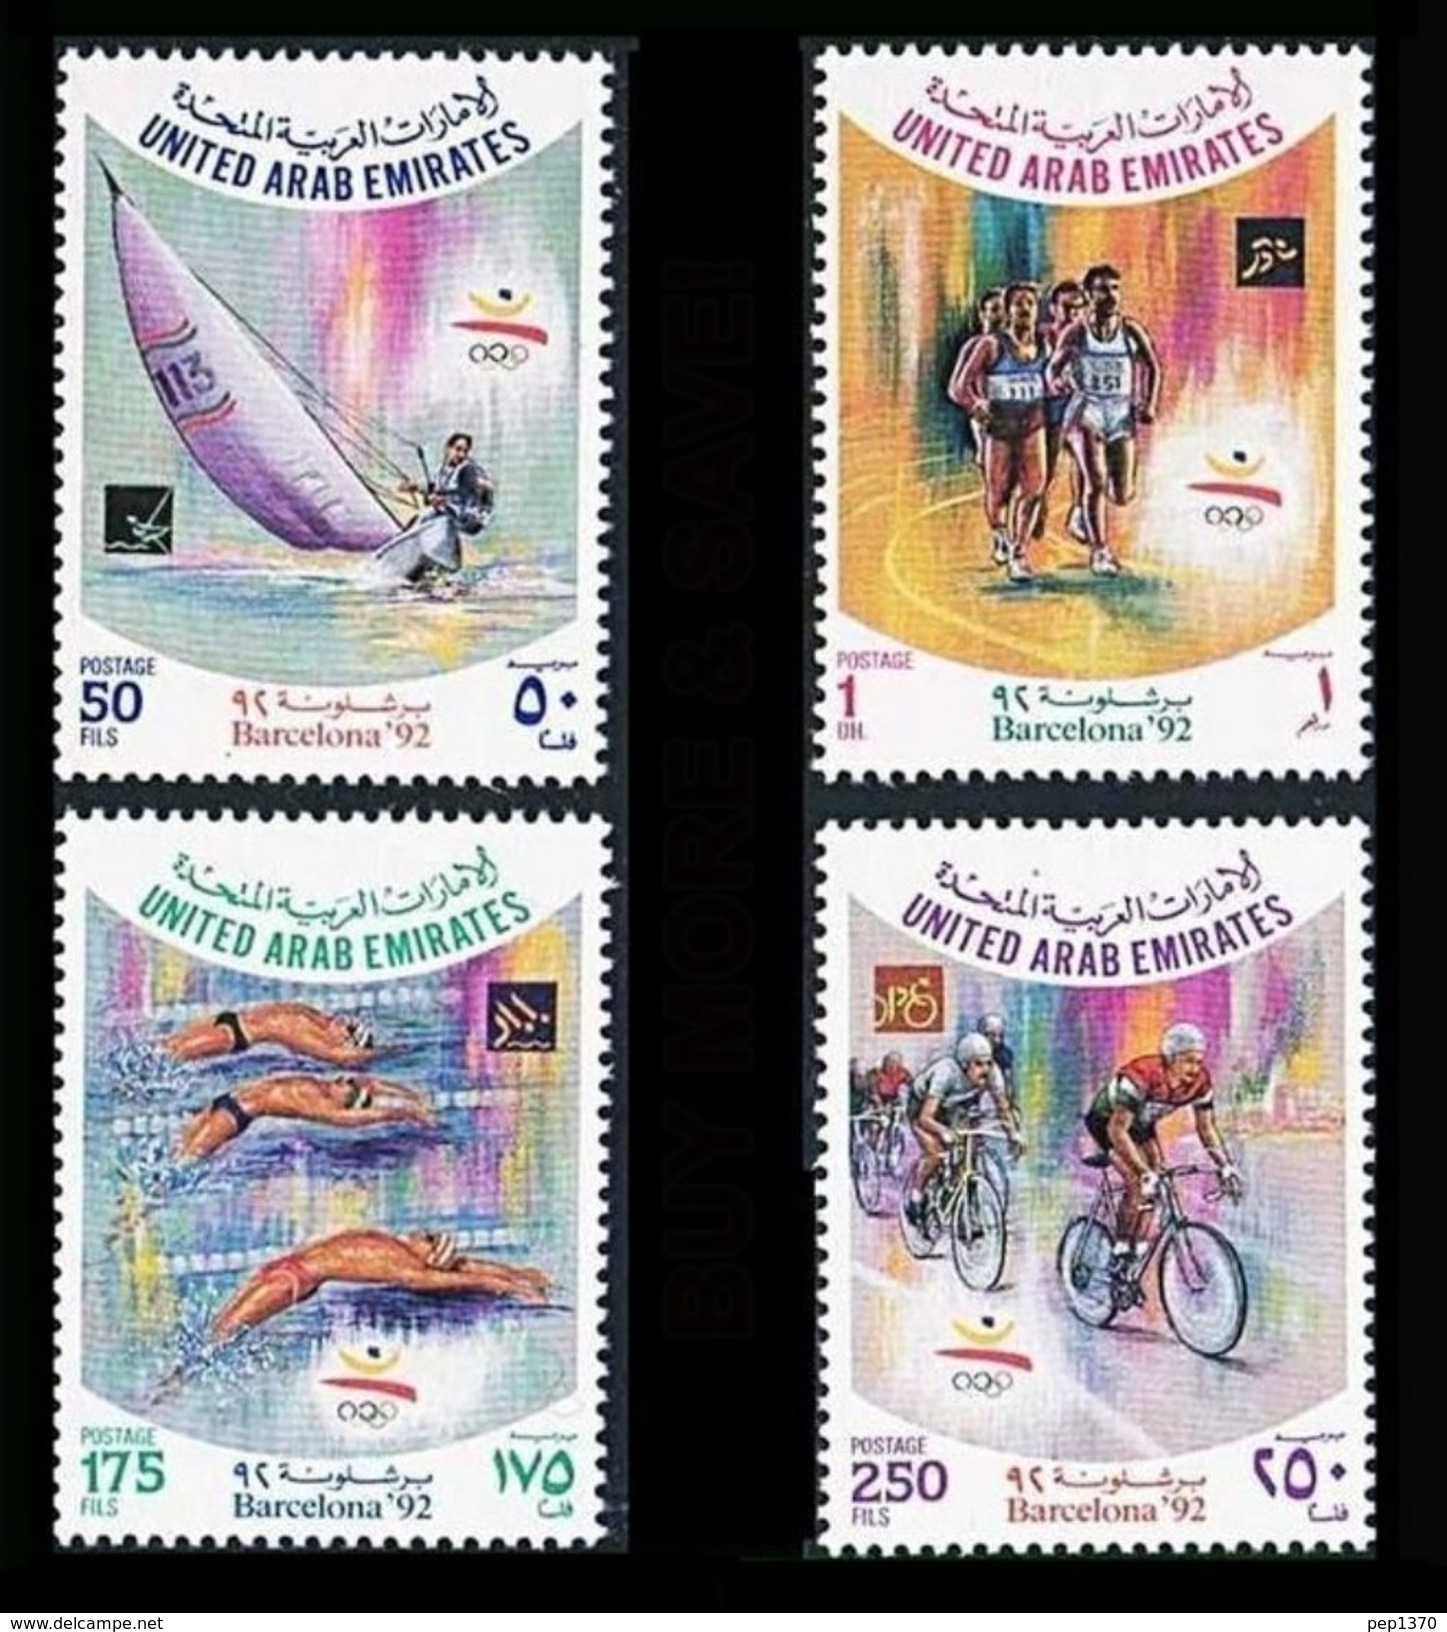 EMIRATOS ARABES UNIDOS 1992 - UNITED ARAB EMIRATES - OLYMPICS BARCELONA 92  YVERT 358/361  MICHEL 374/377  SCOTT 393/396 - Ciclismo